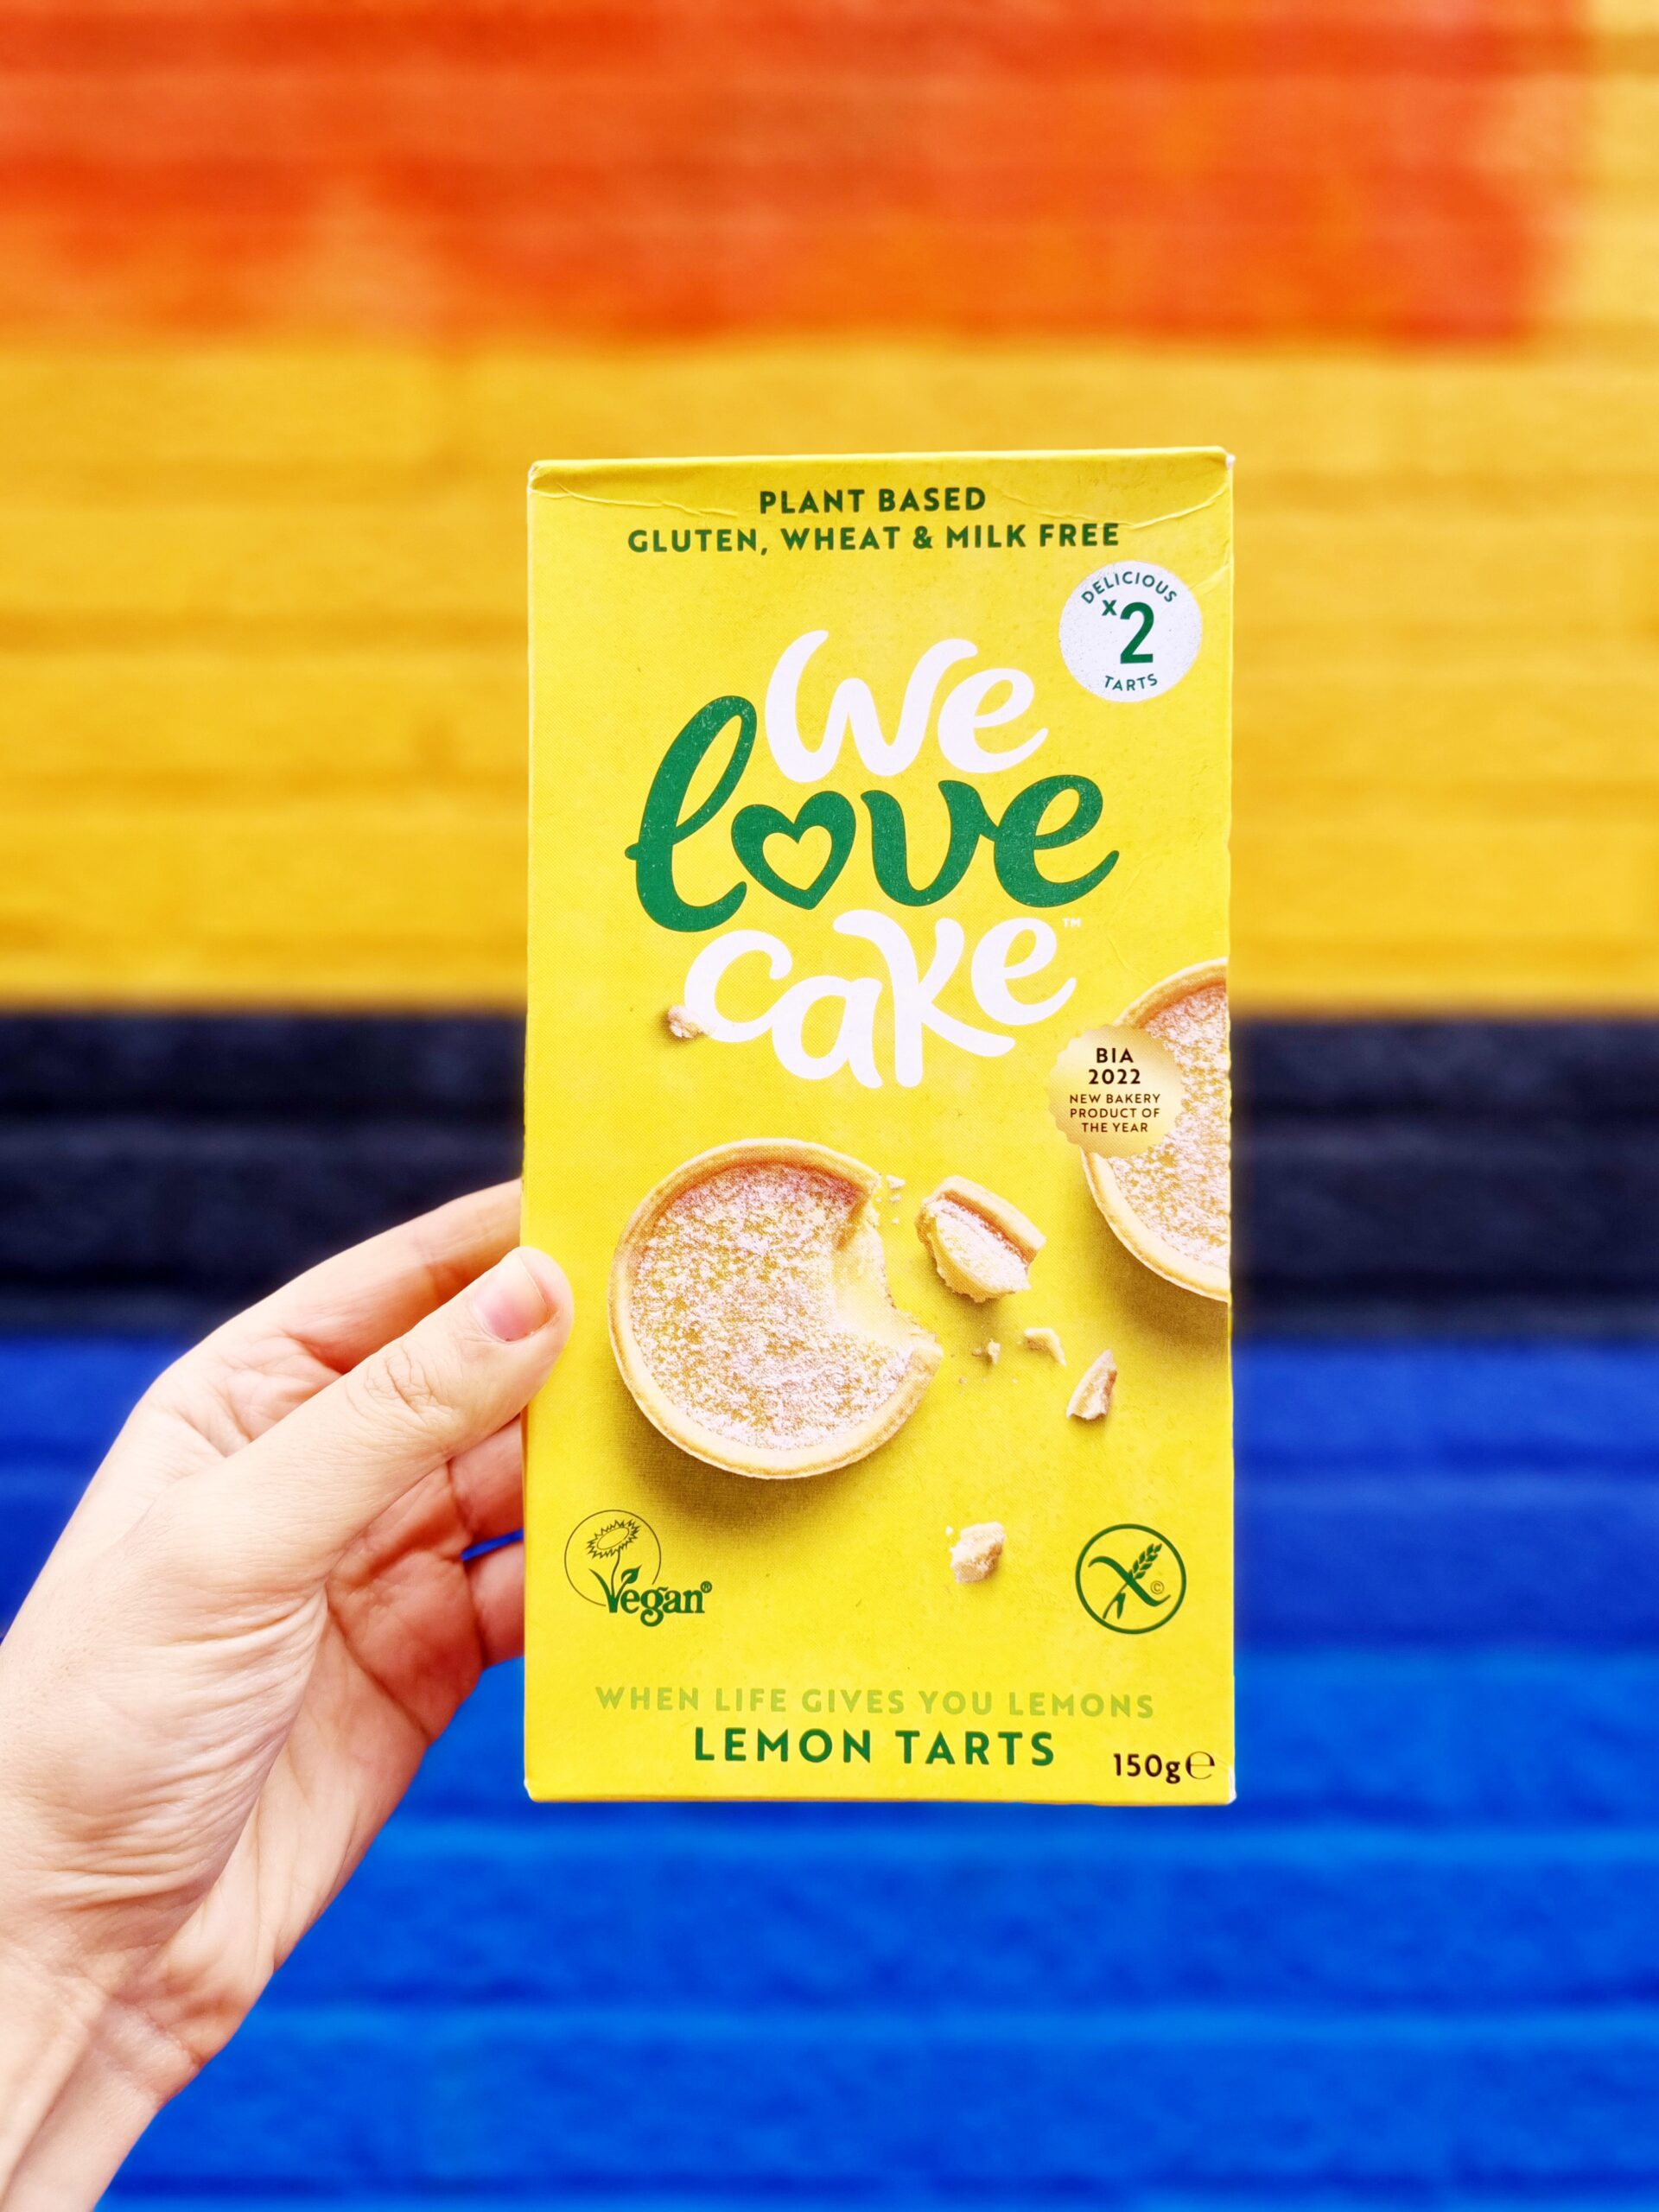 <img src="we love.jpg" alt="we love cake lemon tarts"/>